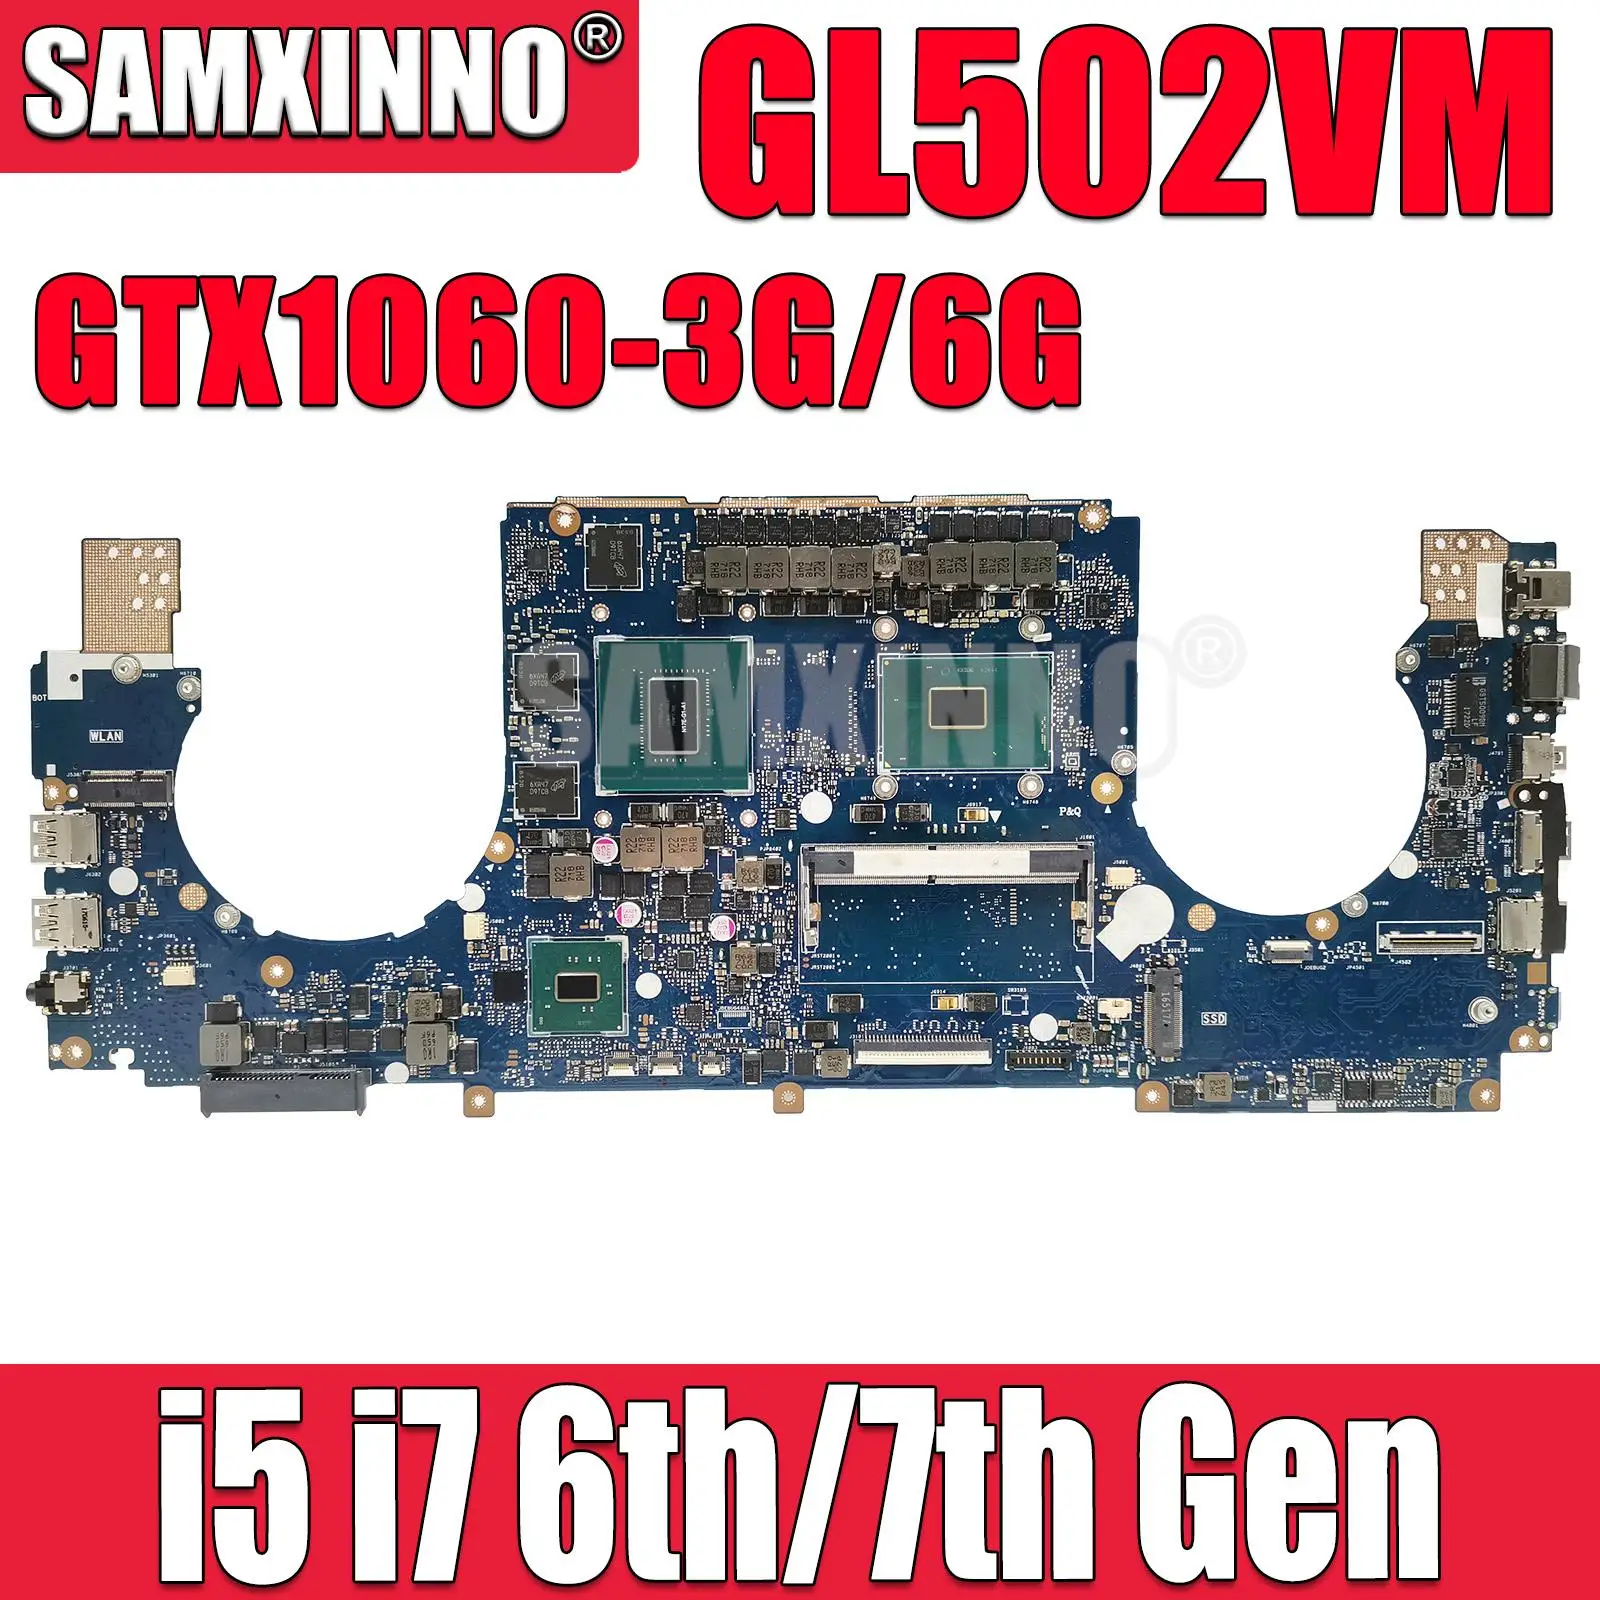 

GL502VM Mainboard For ASUS S5VM S5V GL502V GL502VMK GL502VML GL502VMZ Laptop Motherboard I5 I7 6th 7th Gen CPU GTX1060M-3G/6G